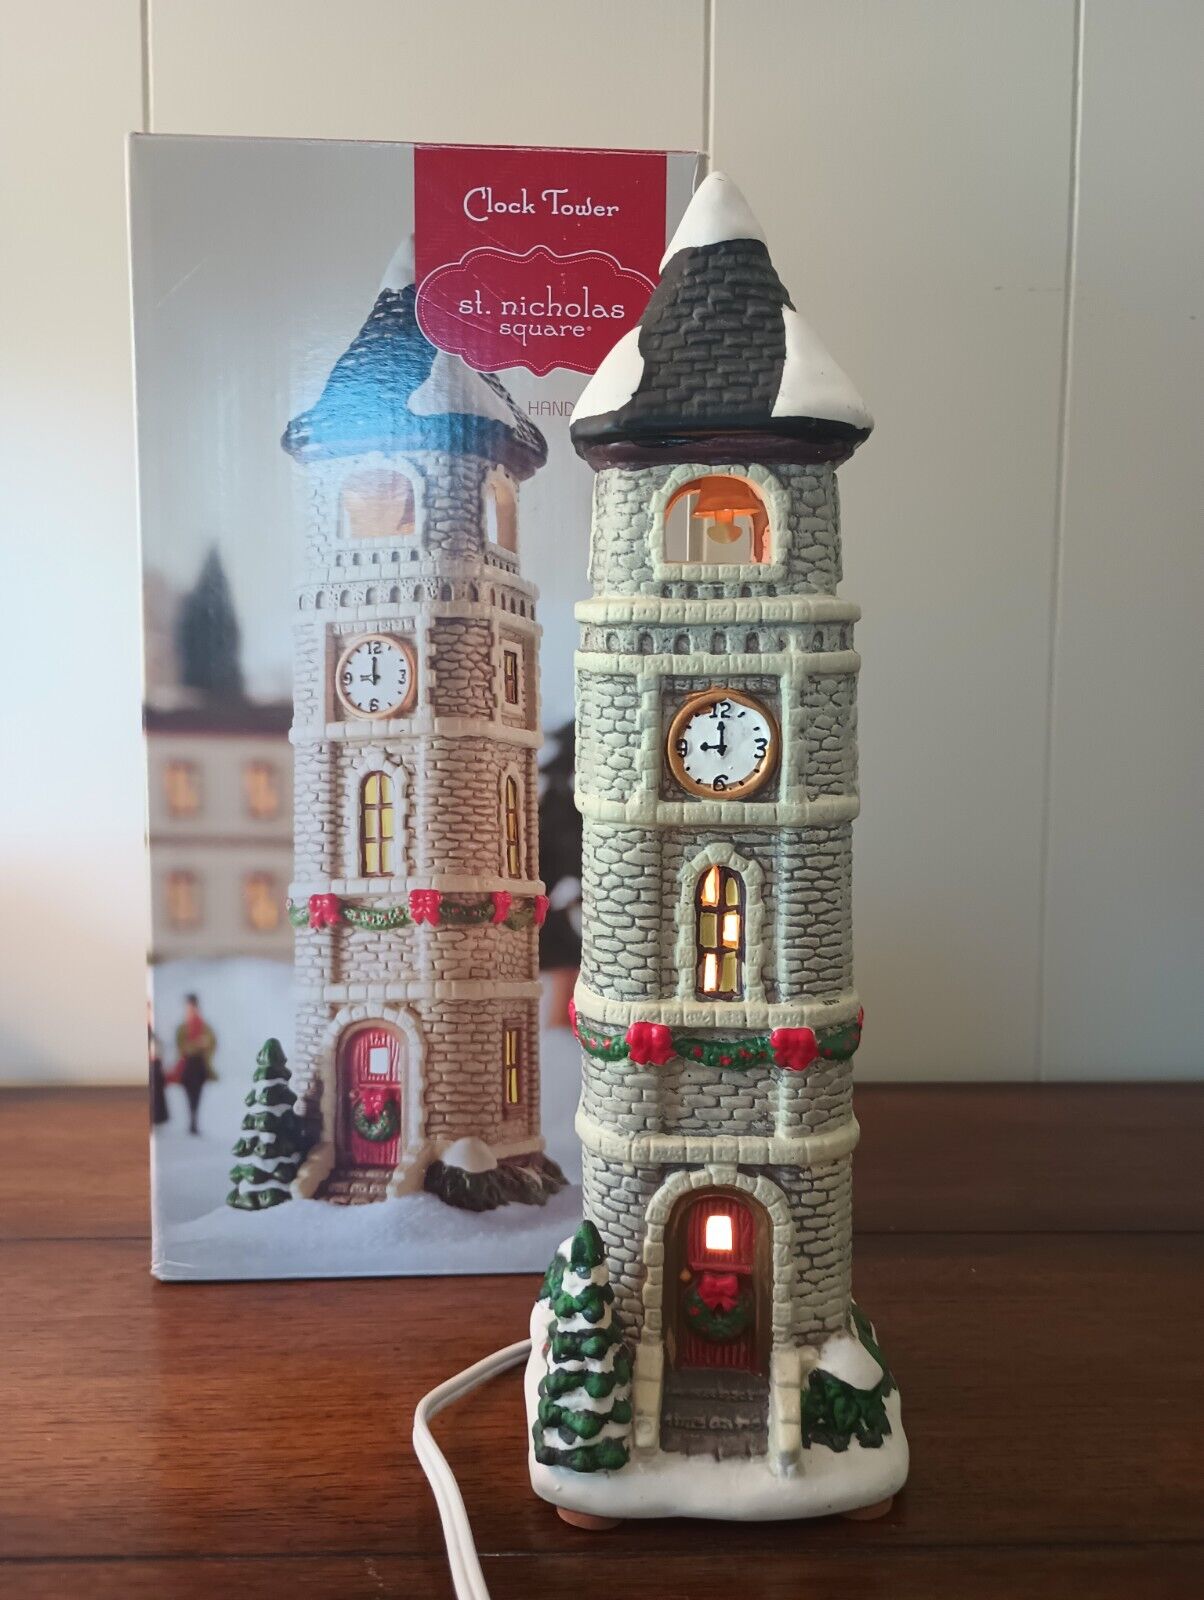 St Nicholas Square Vintage Clock Tower Illuminated Christmas Village Collection